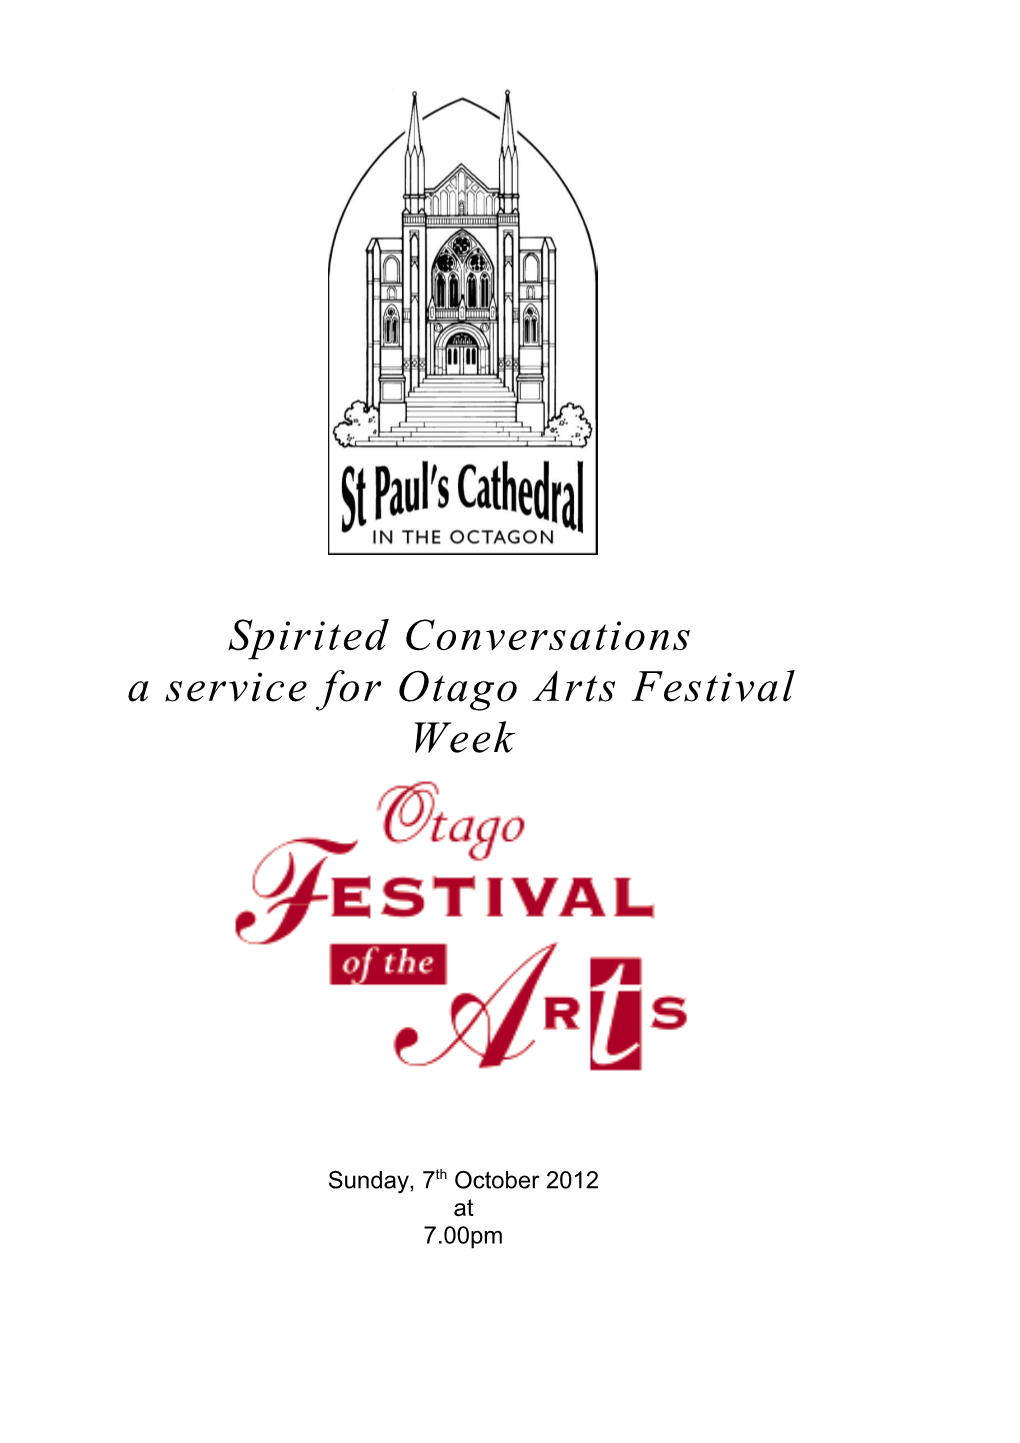 Spirited Conversations a Service for Otago Arts Festival Week